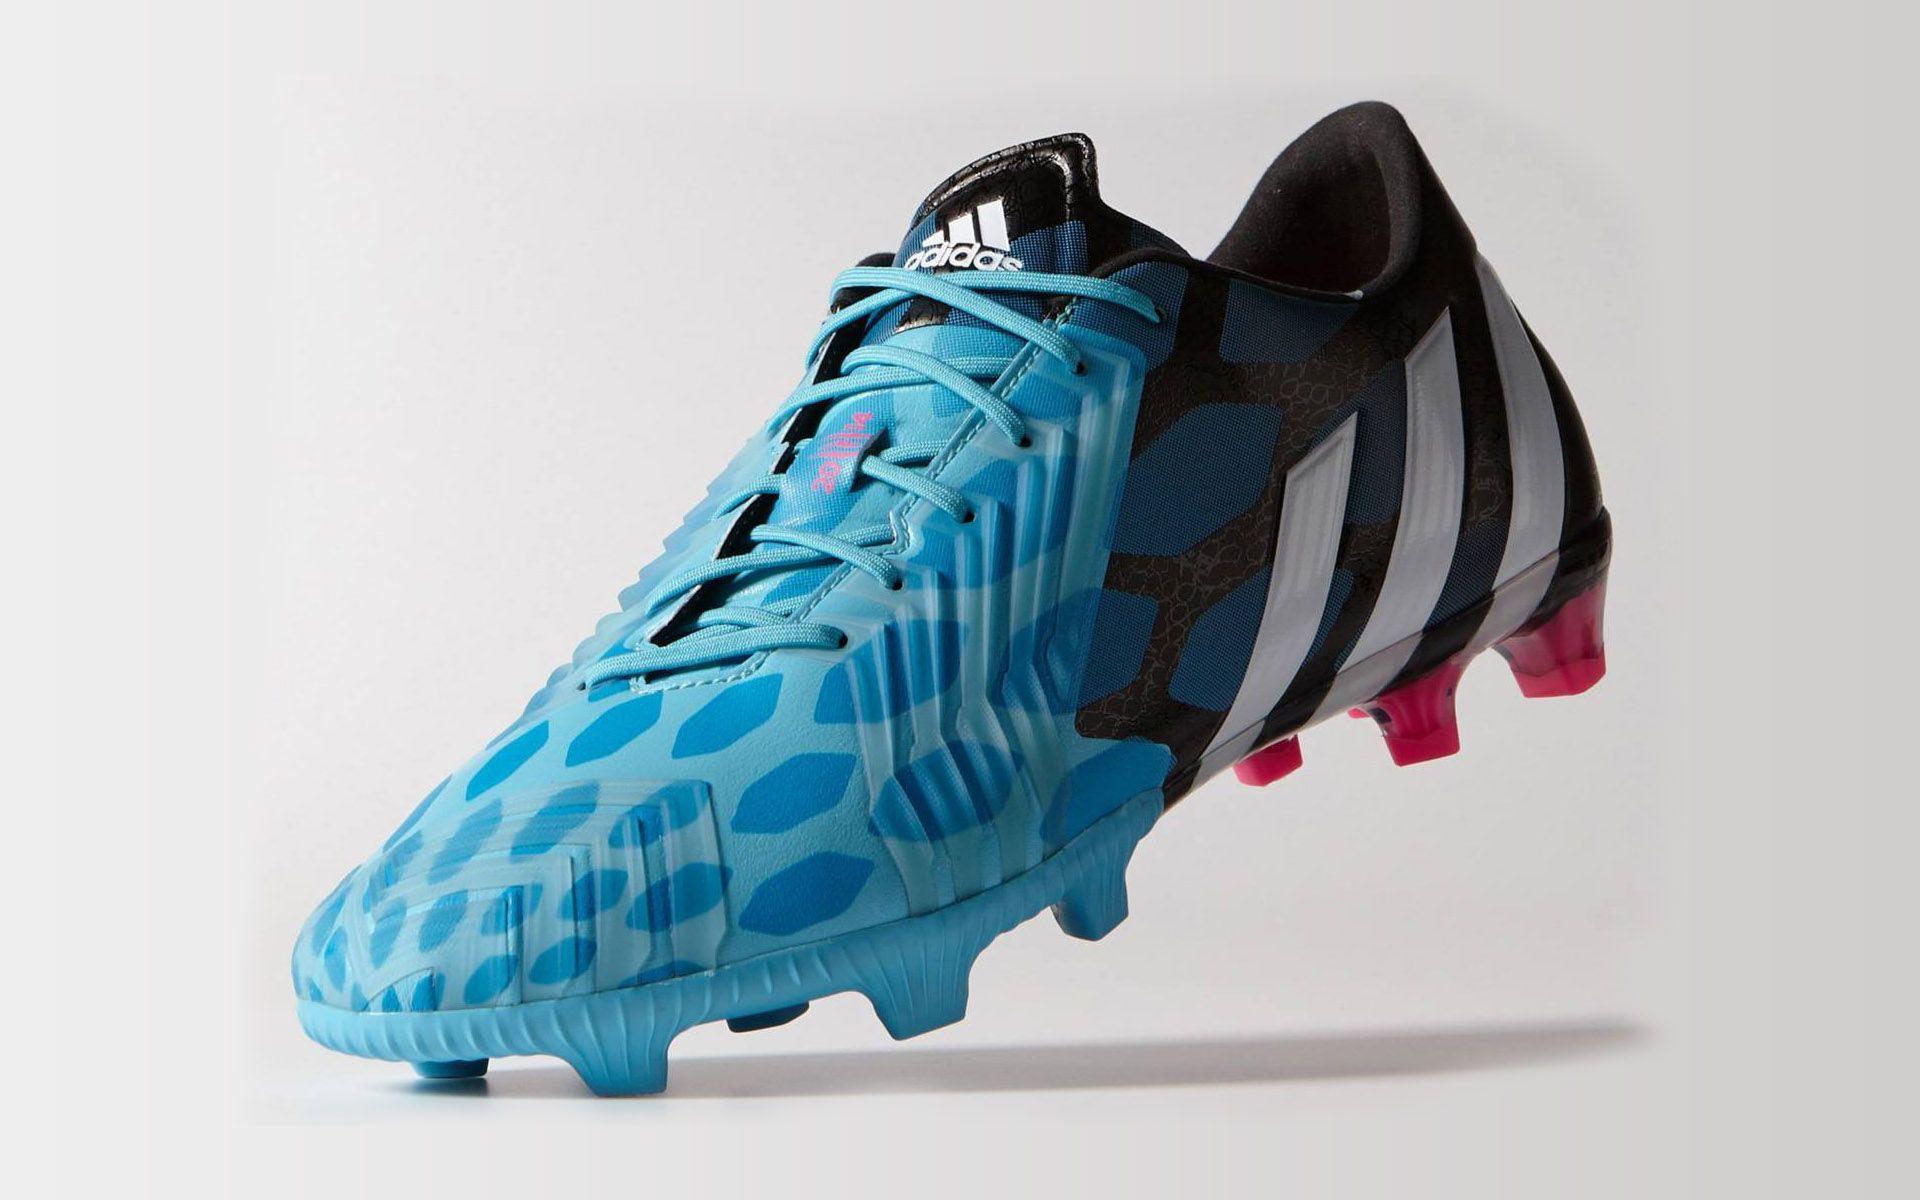 Adidas Predator Instinct 2014 2015 Football Boot Wallpaper Wide Or